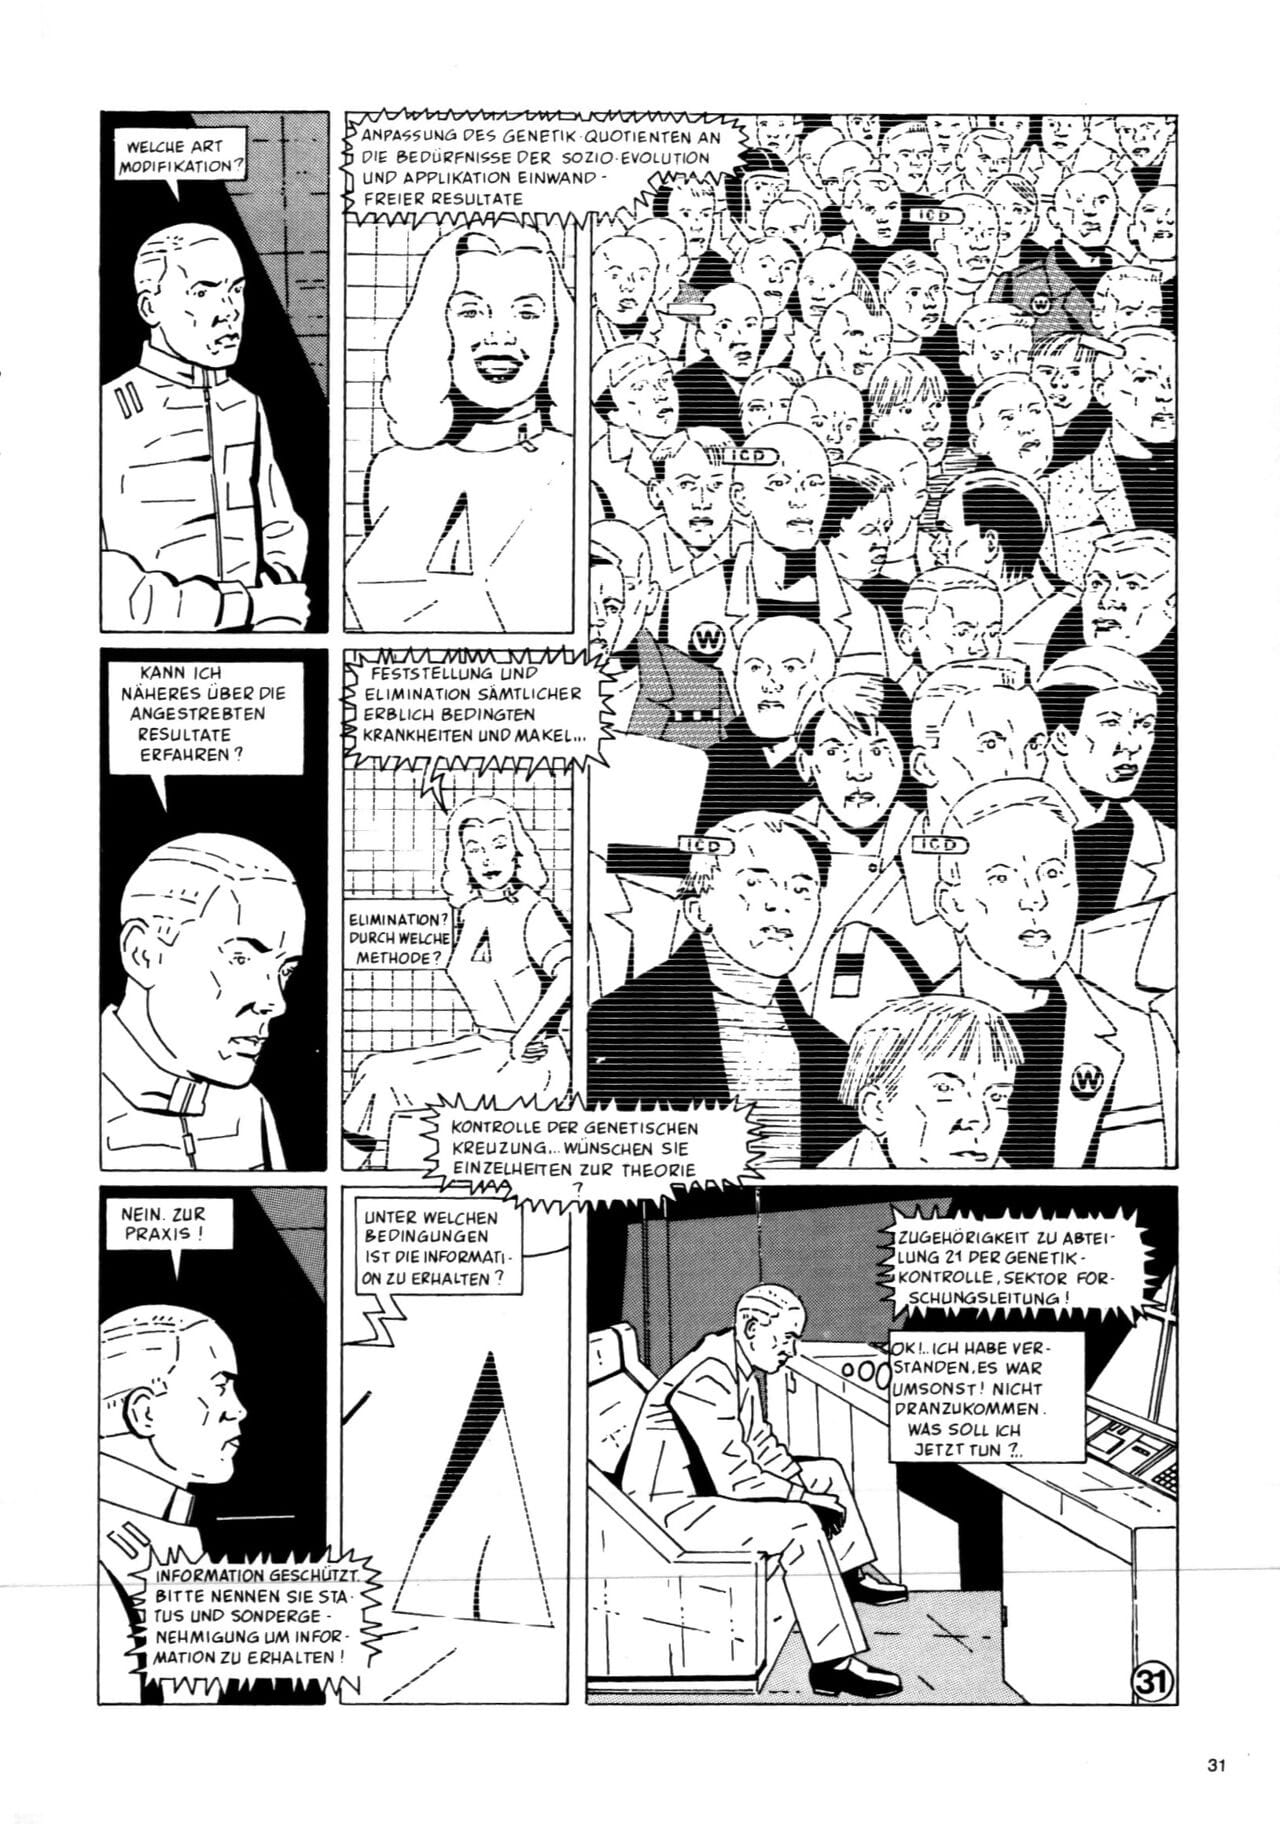 Schwermetall #080 parte 2 page 1